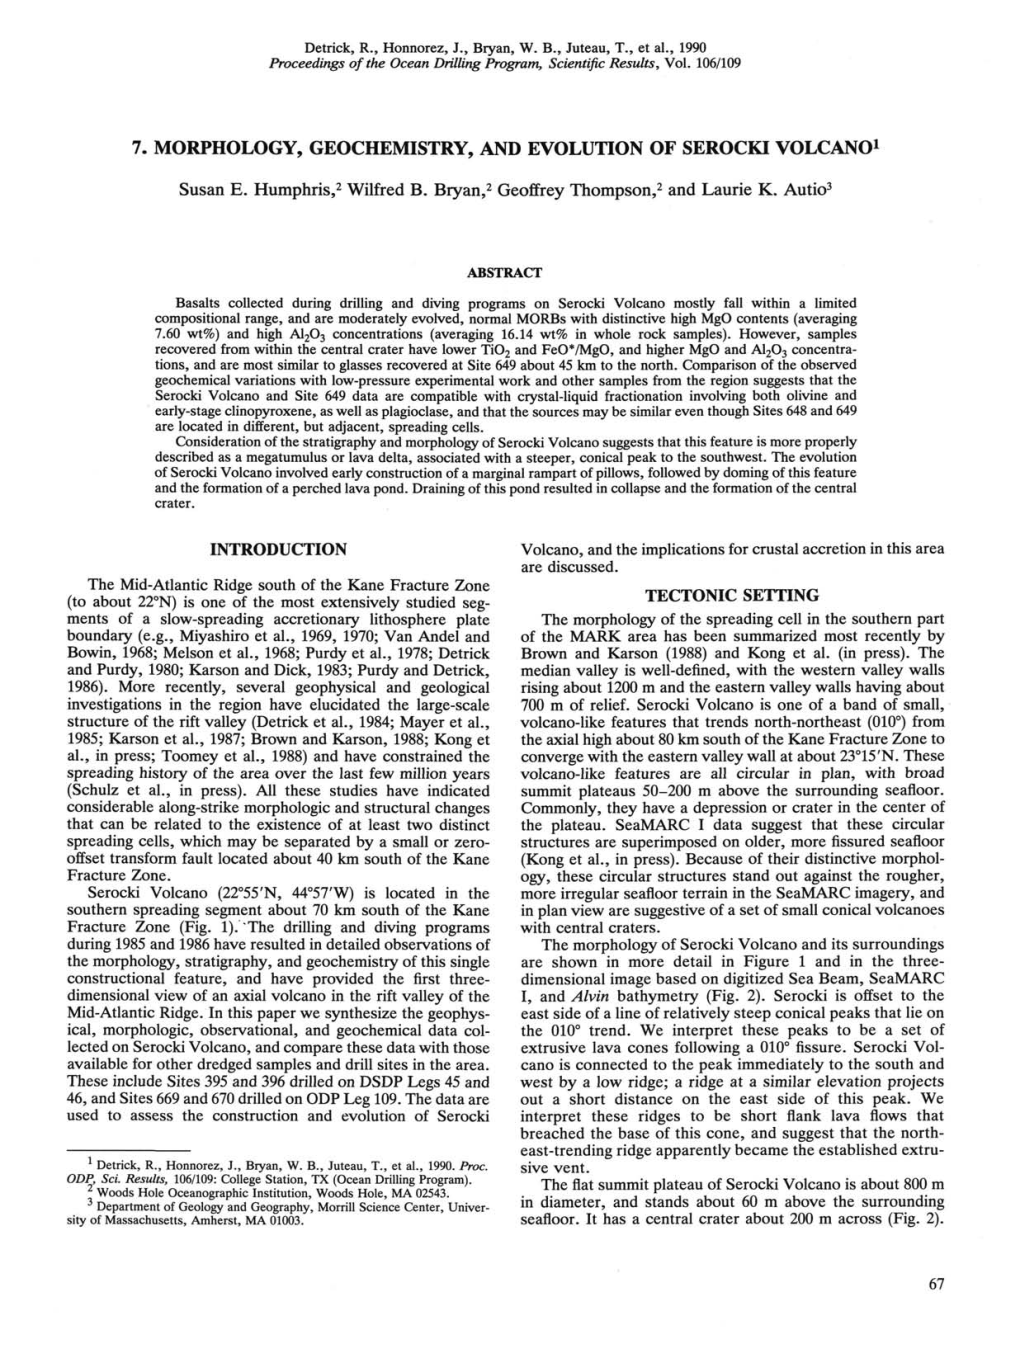 7. Morphology, Geochemistry, and Evolution of Serocki Volcano1